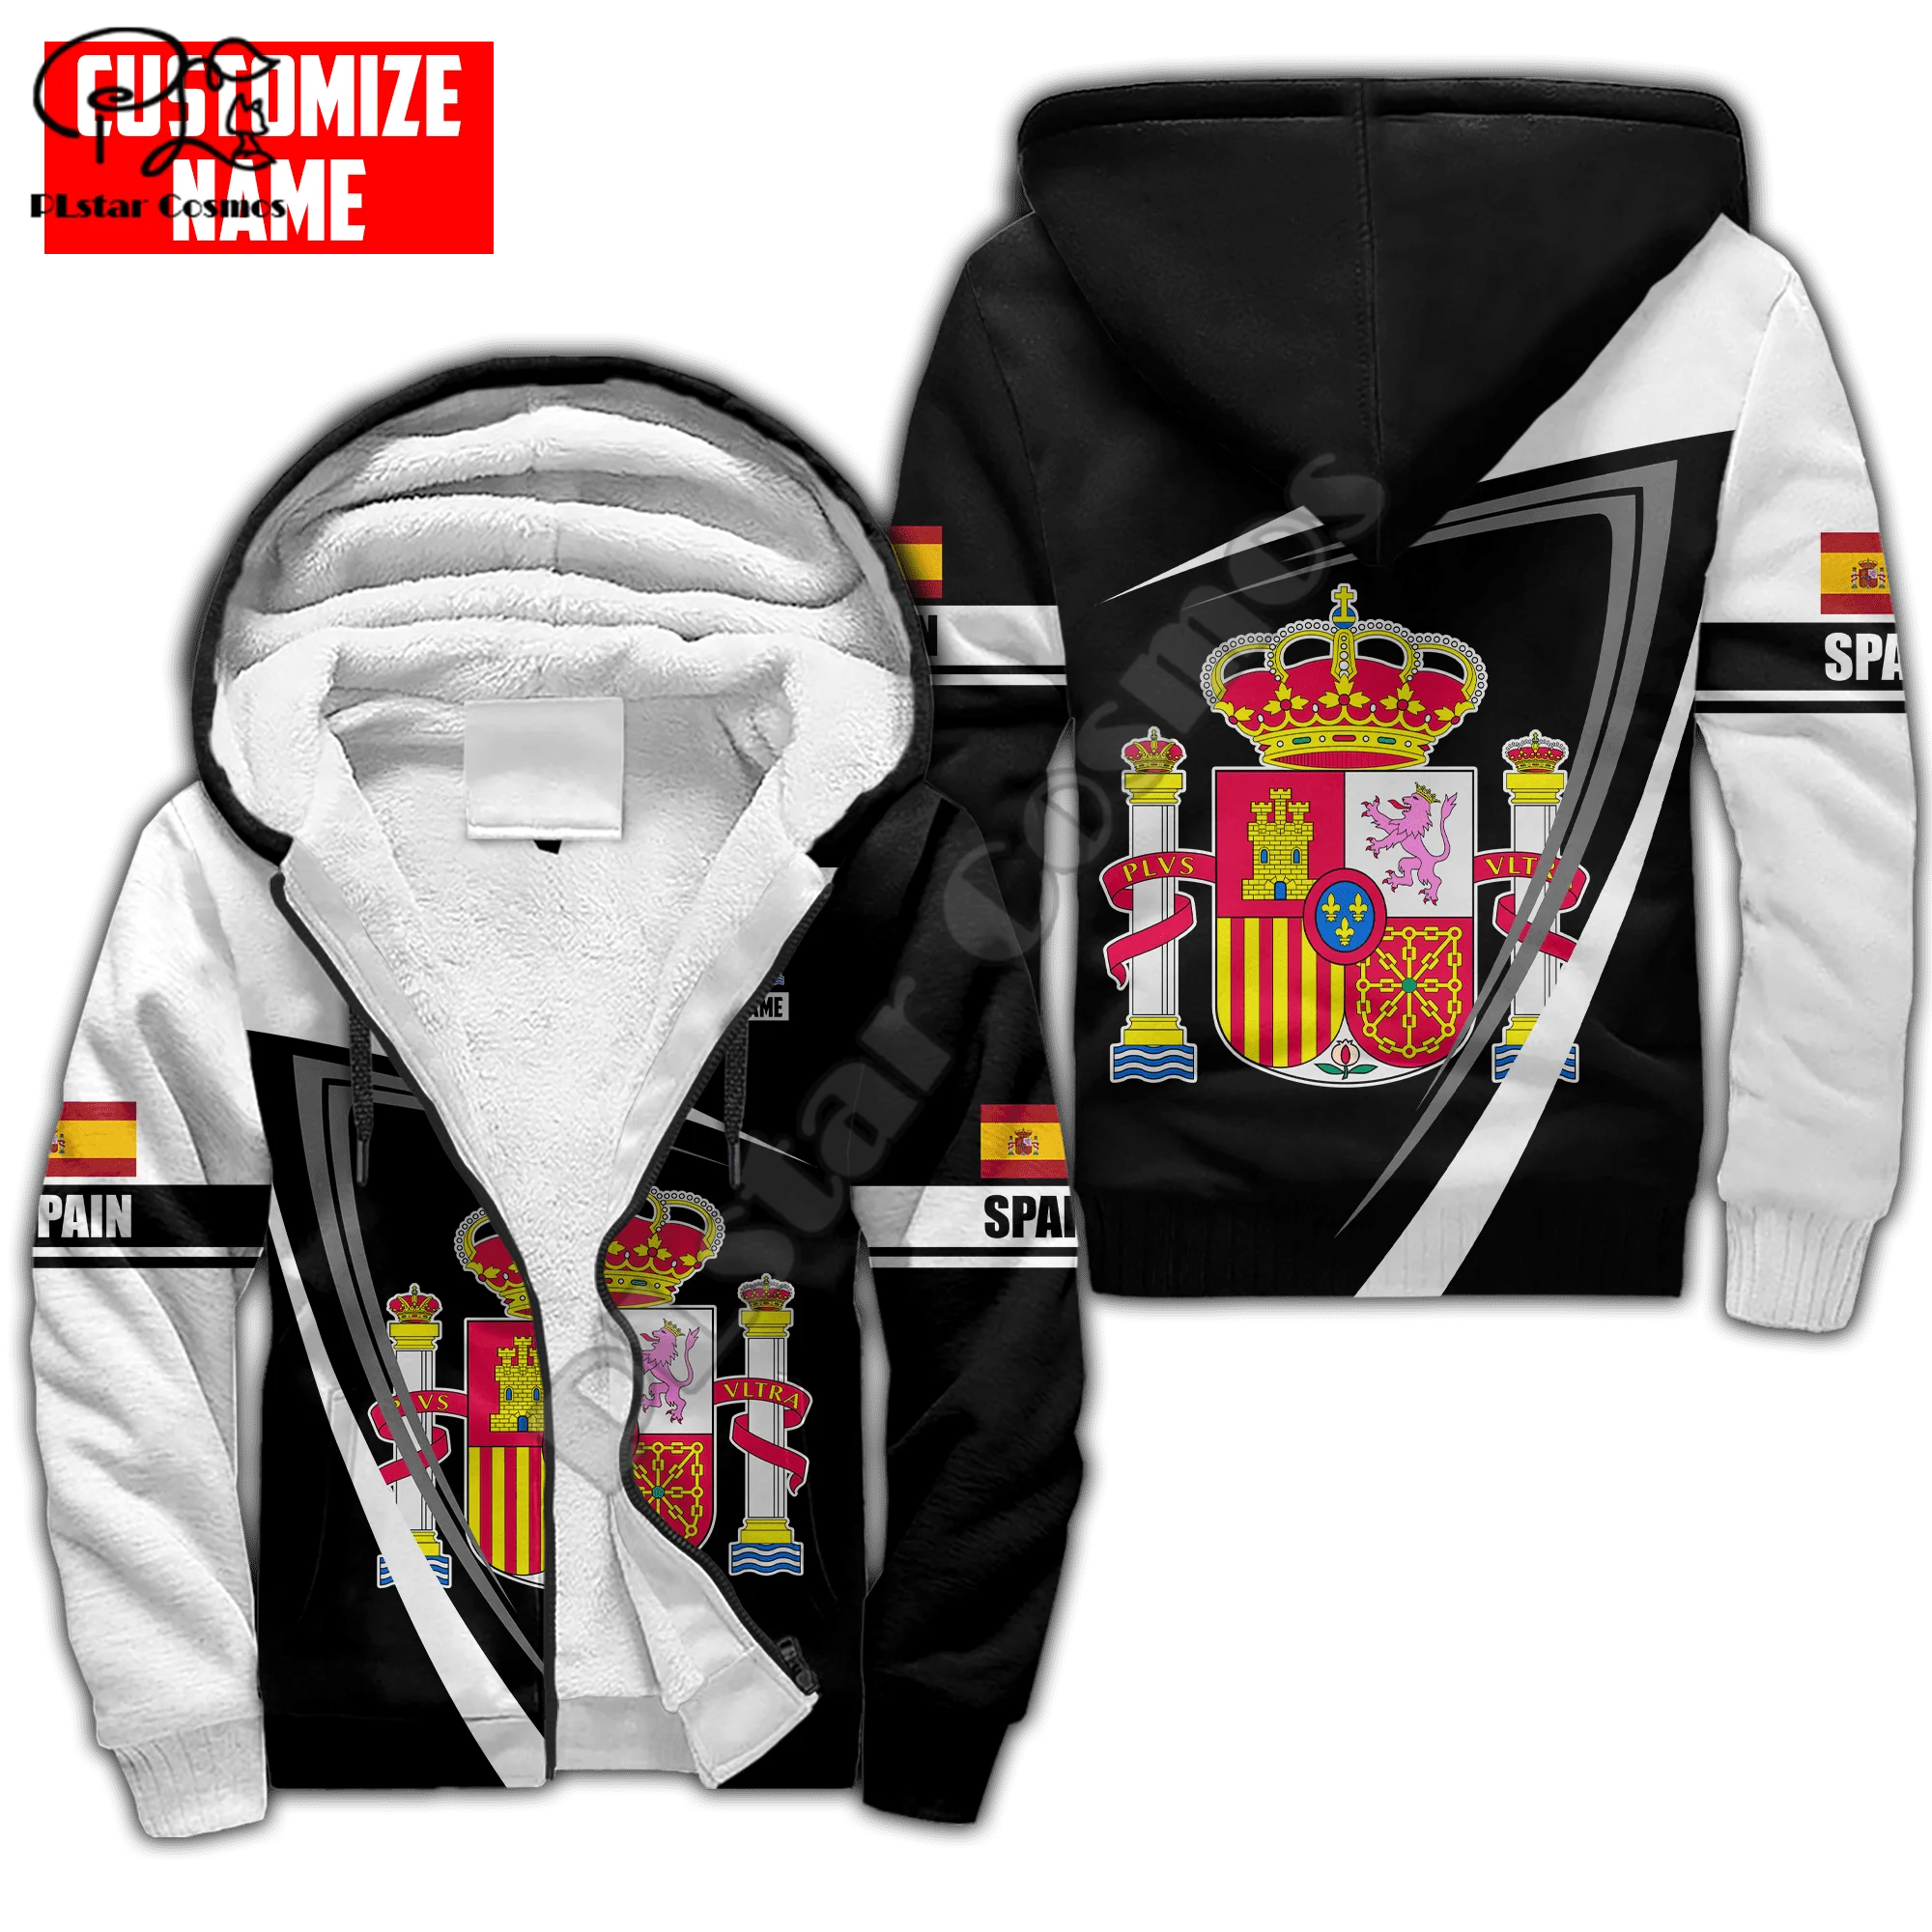 PLstar Cosmos Spain National Emblem 3D Printed Winter Clothing Casual Warm Hood Thick Coat Zipper Man Fleece Hoodies Jacket S25